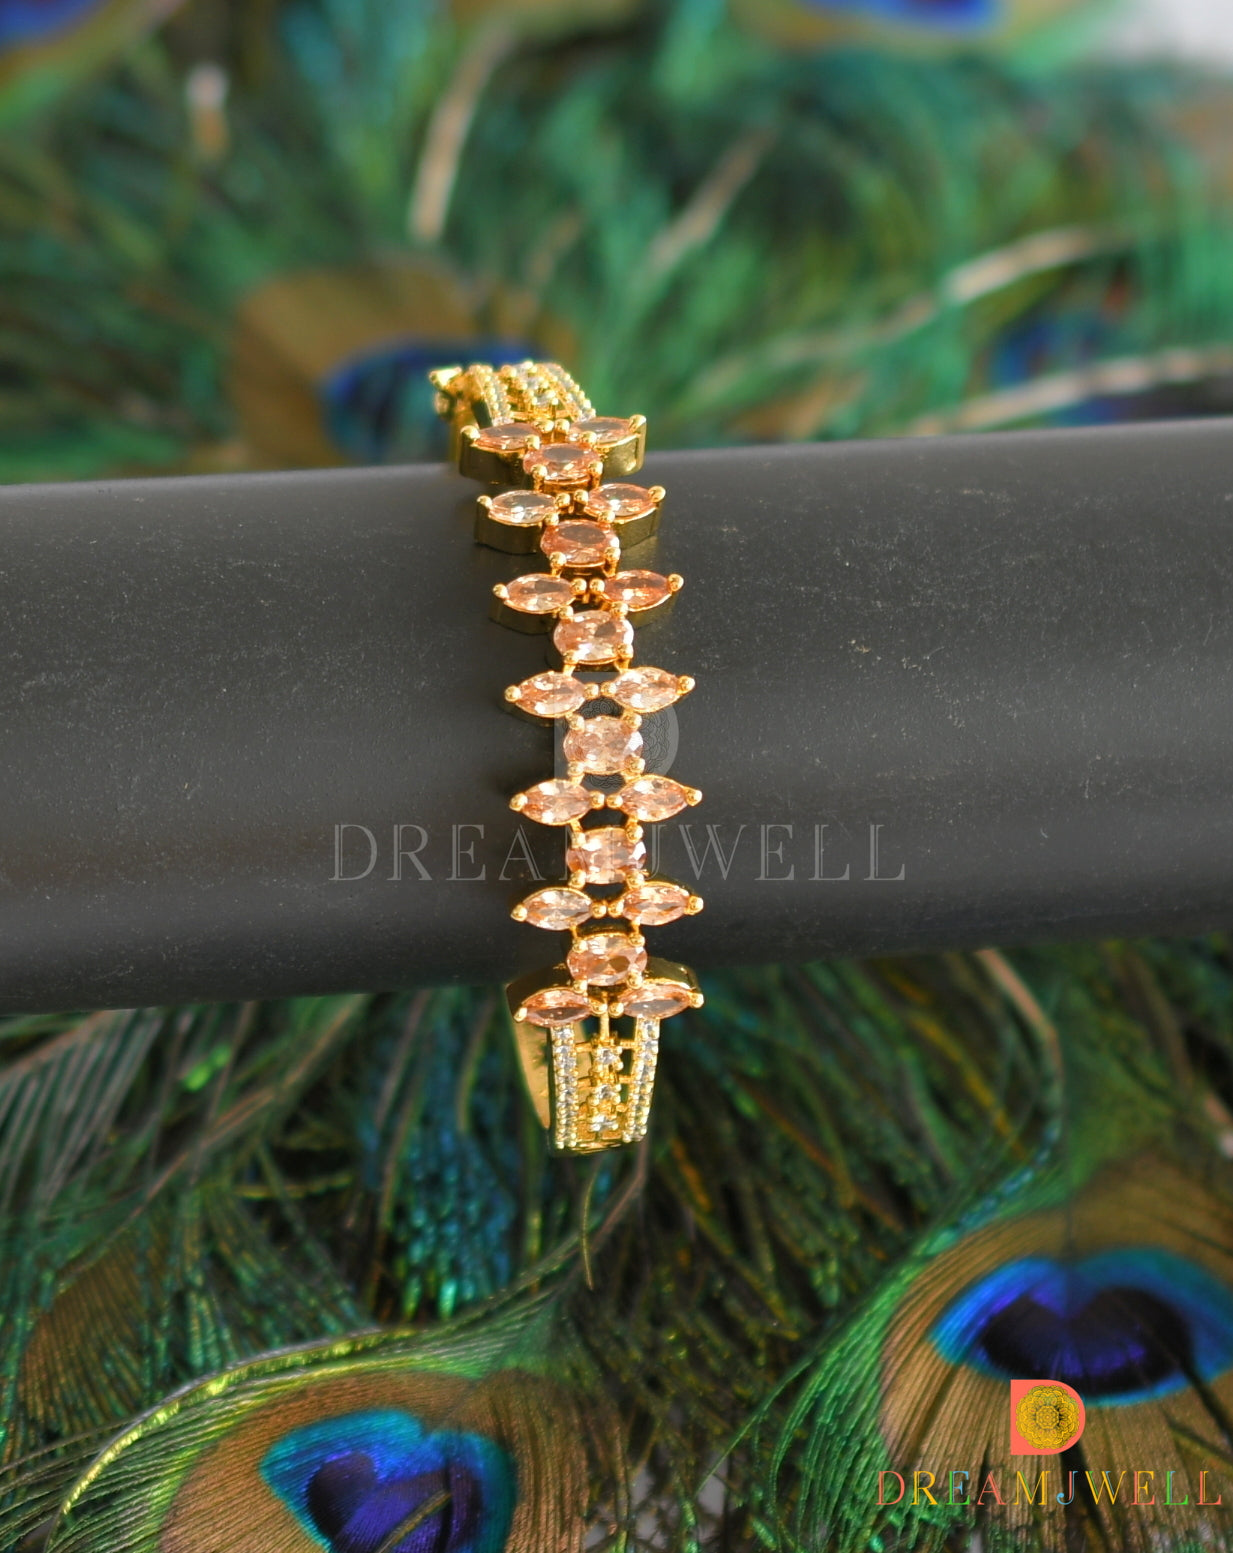 Gold tone gold stone Bracelet dj-16250